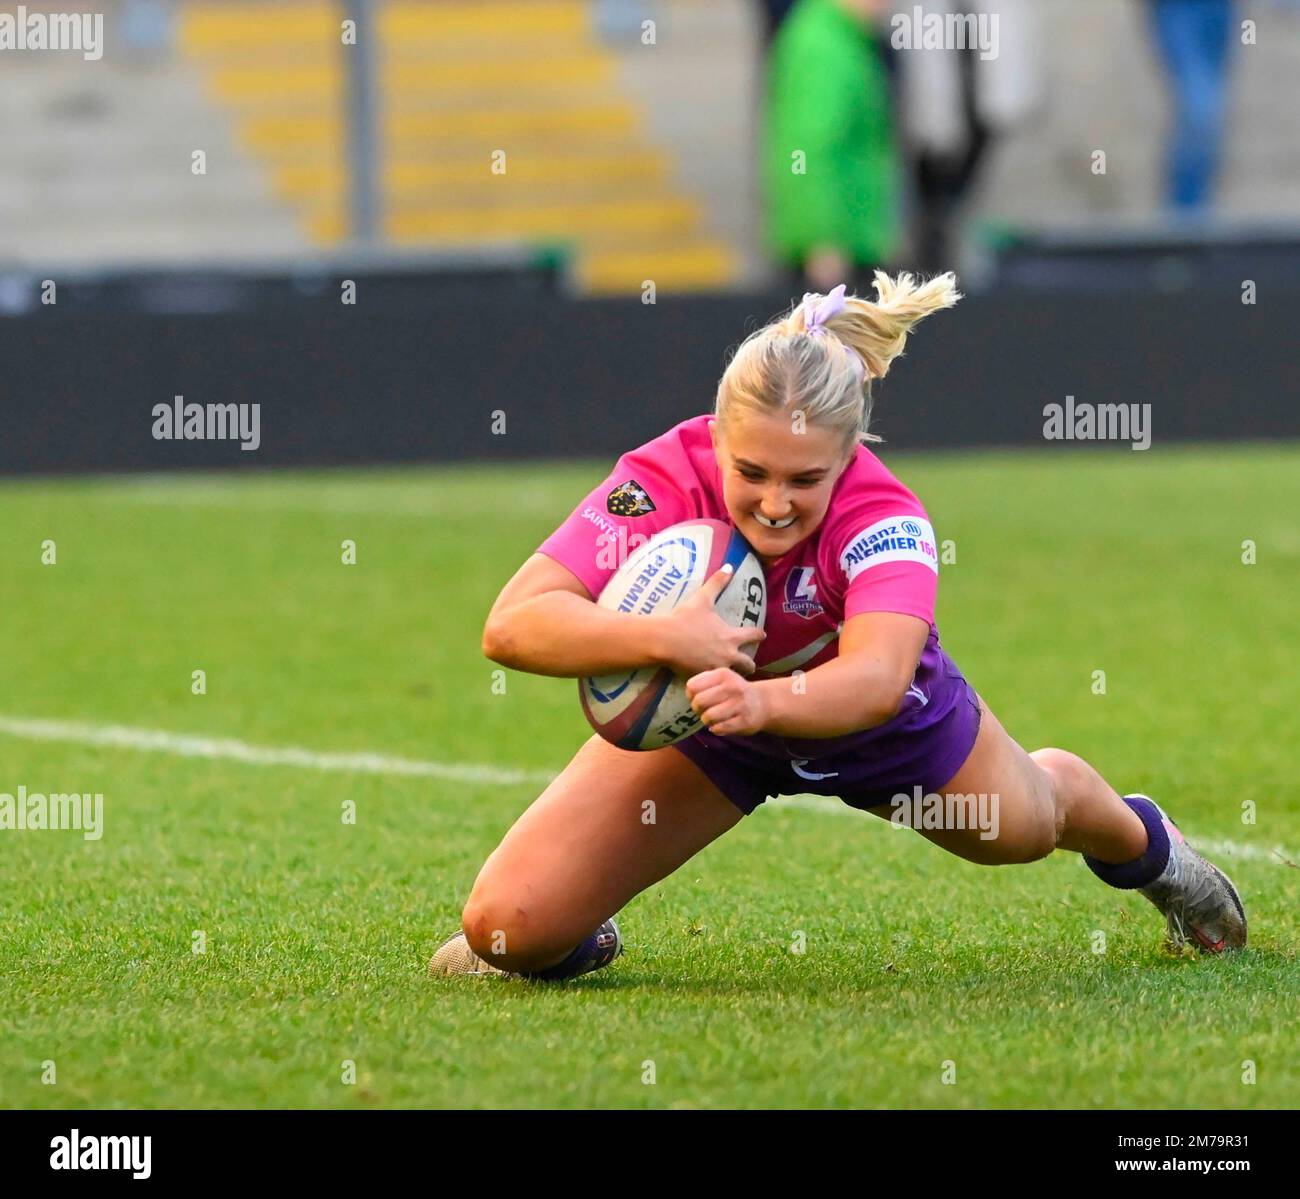 NORTHAMPTON, ENGLAND Jess Weaver of Loughborough Lightning gets a try during Womens Allianz Premiership 15s match